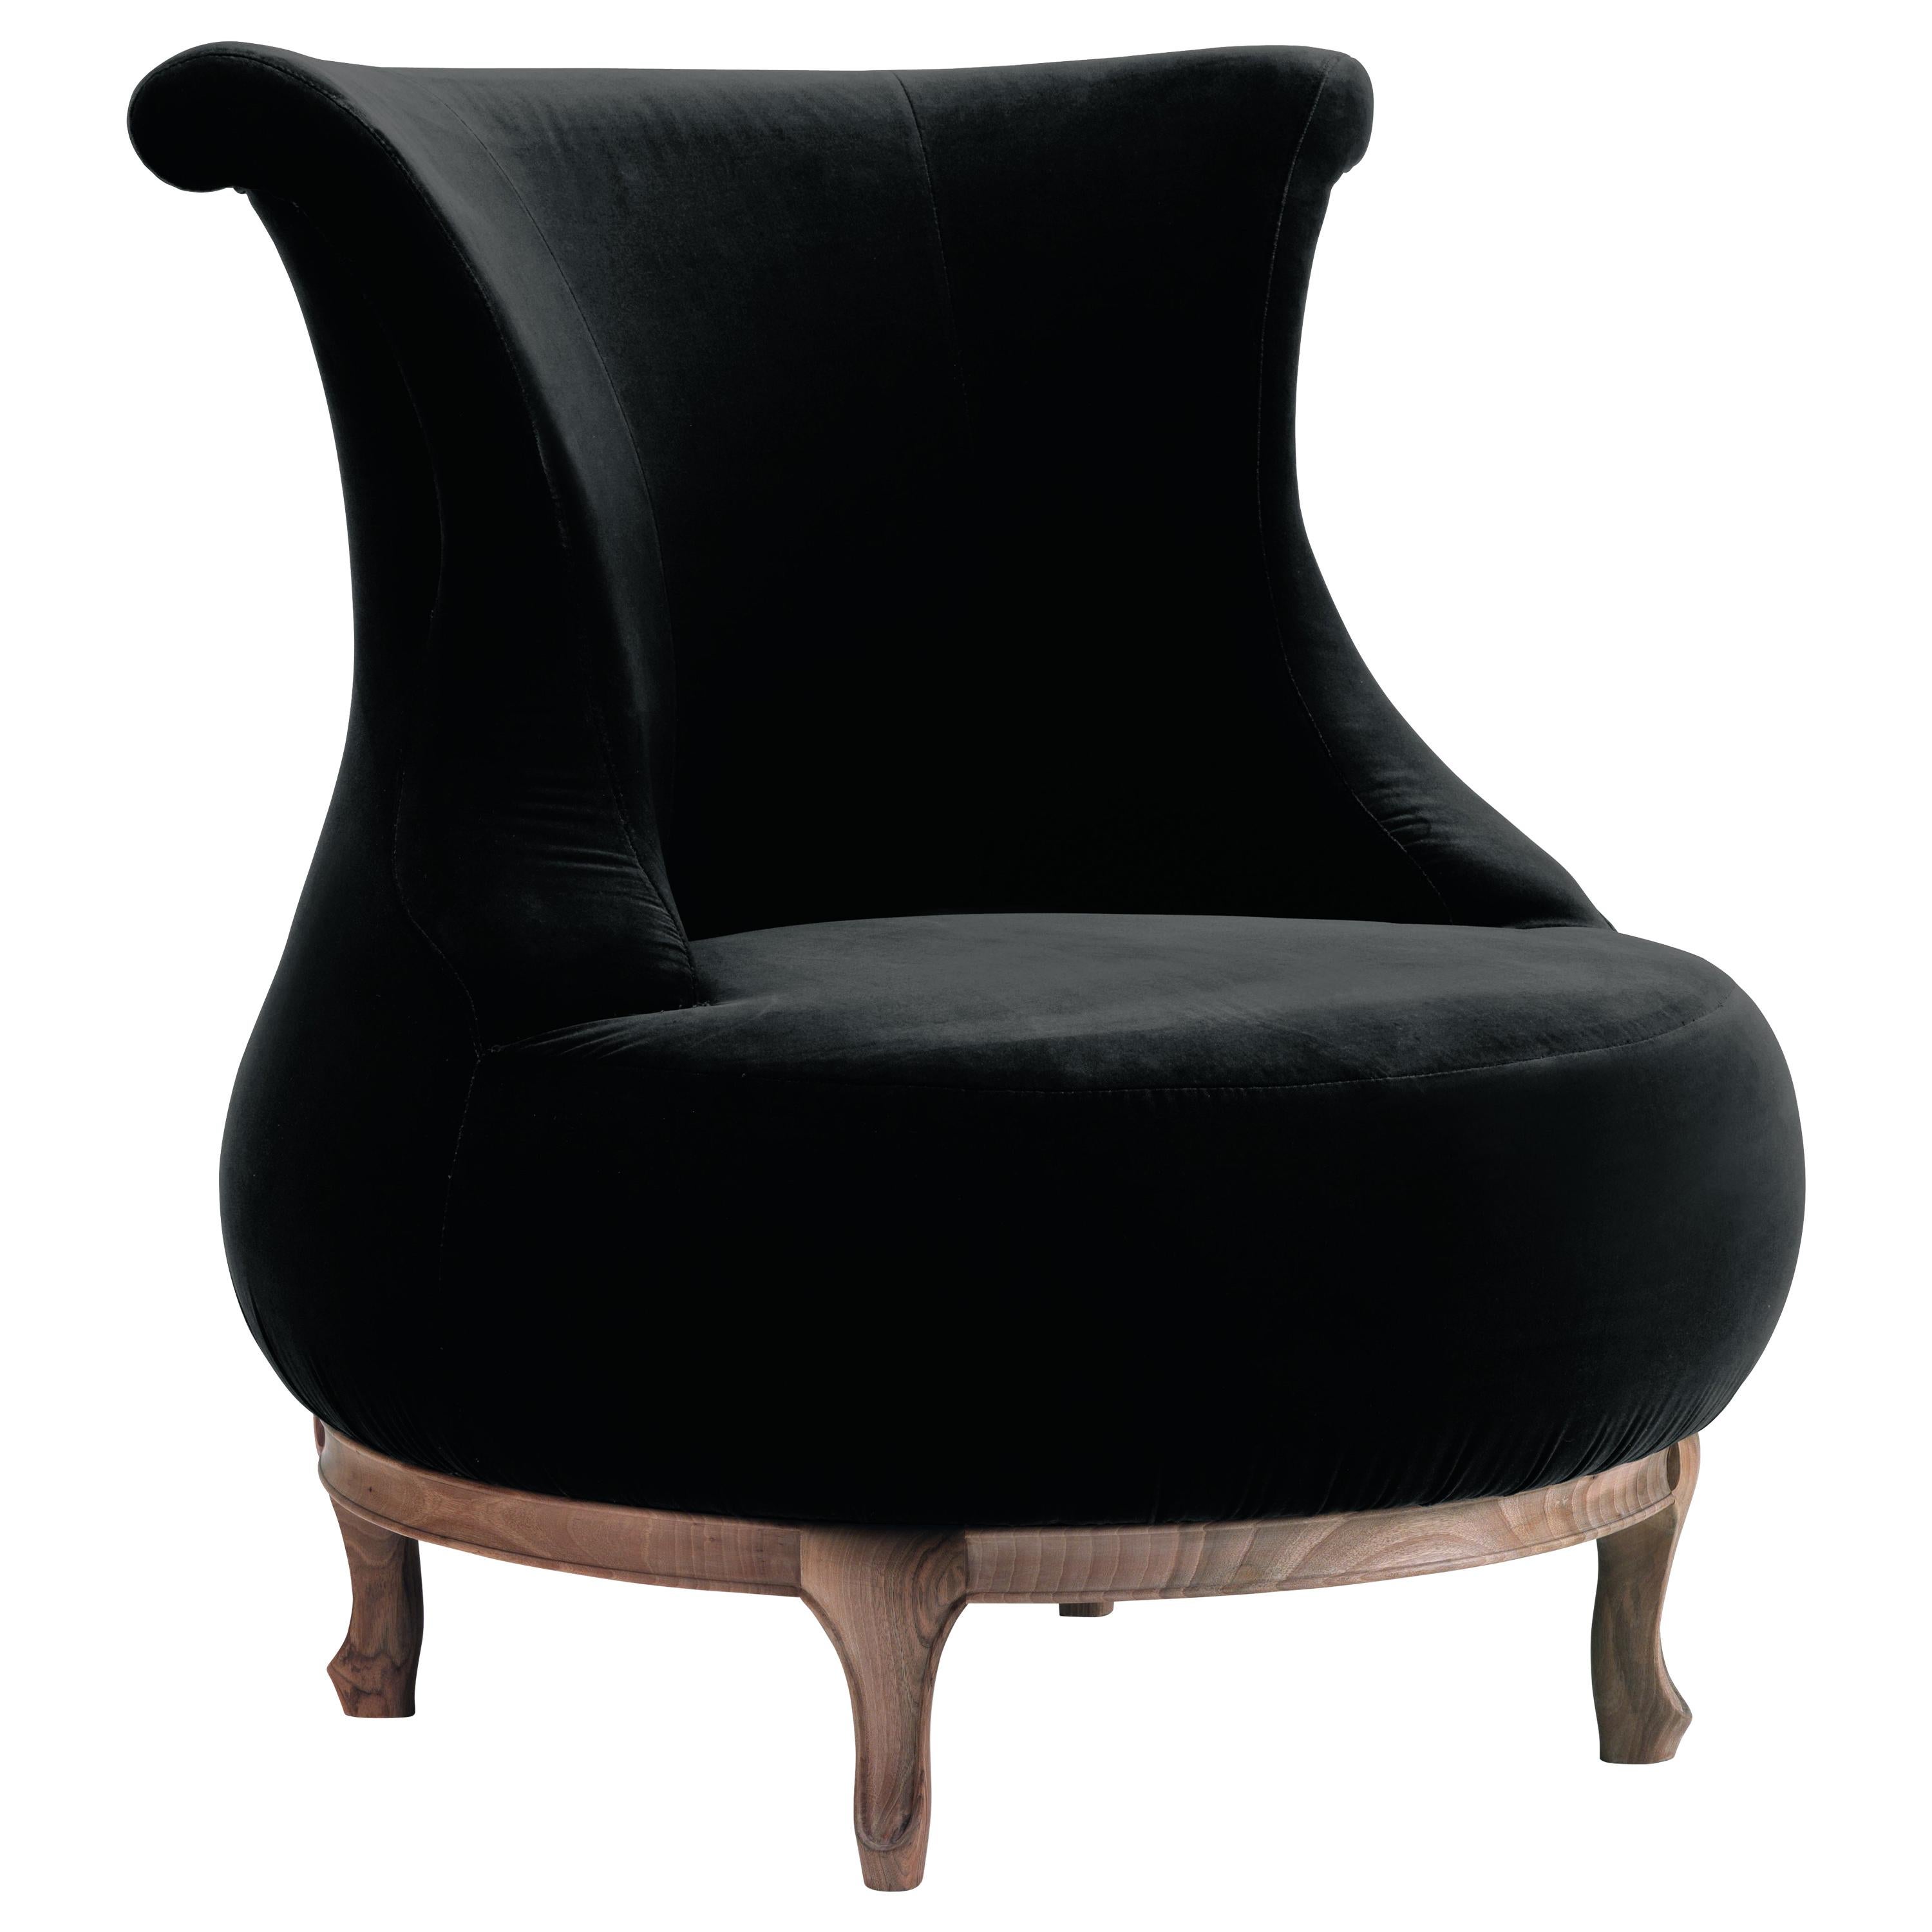 PLUMP/A Black Velvet Armchair in Solid Walnut Wood Frame   For Sale